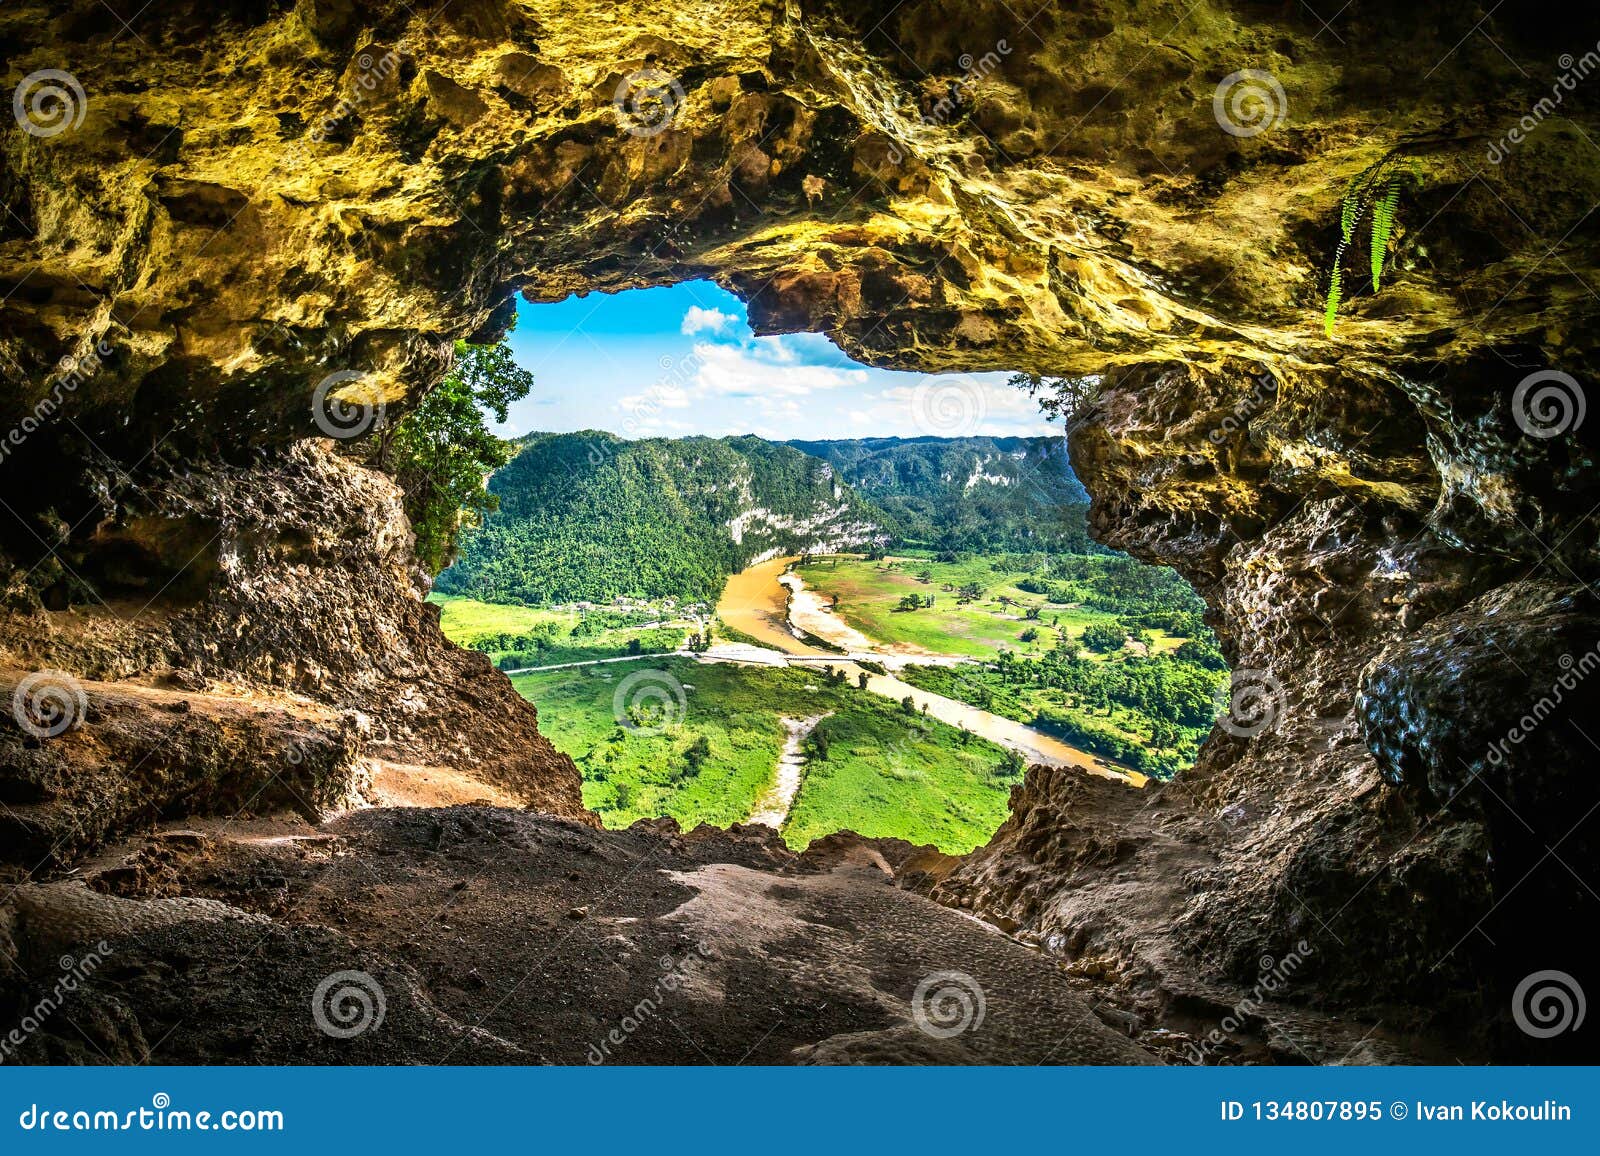 cueva ventana natural cave in puerto rico